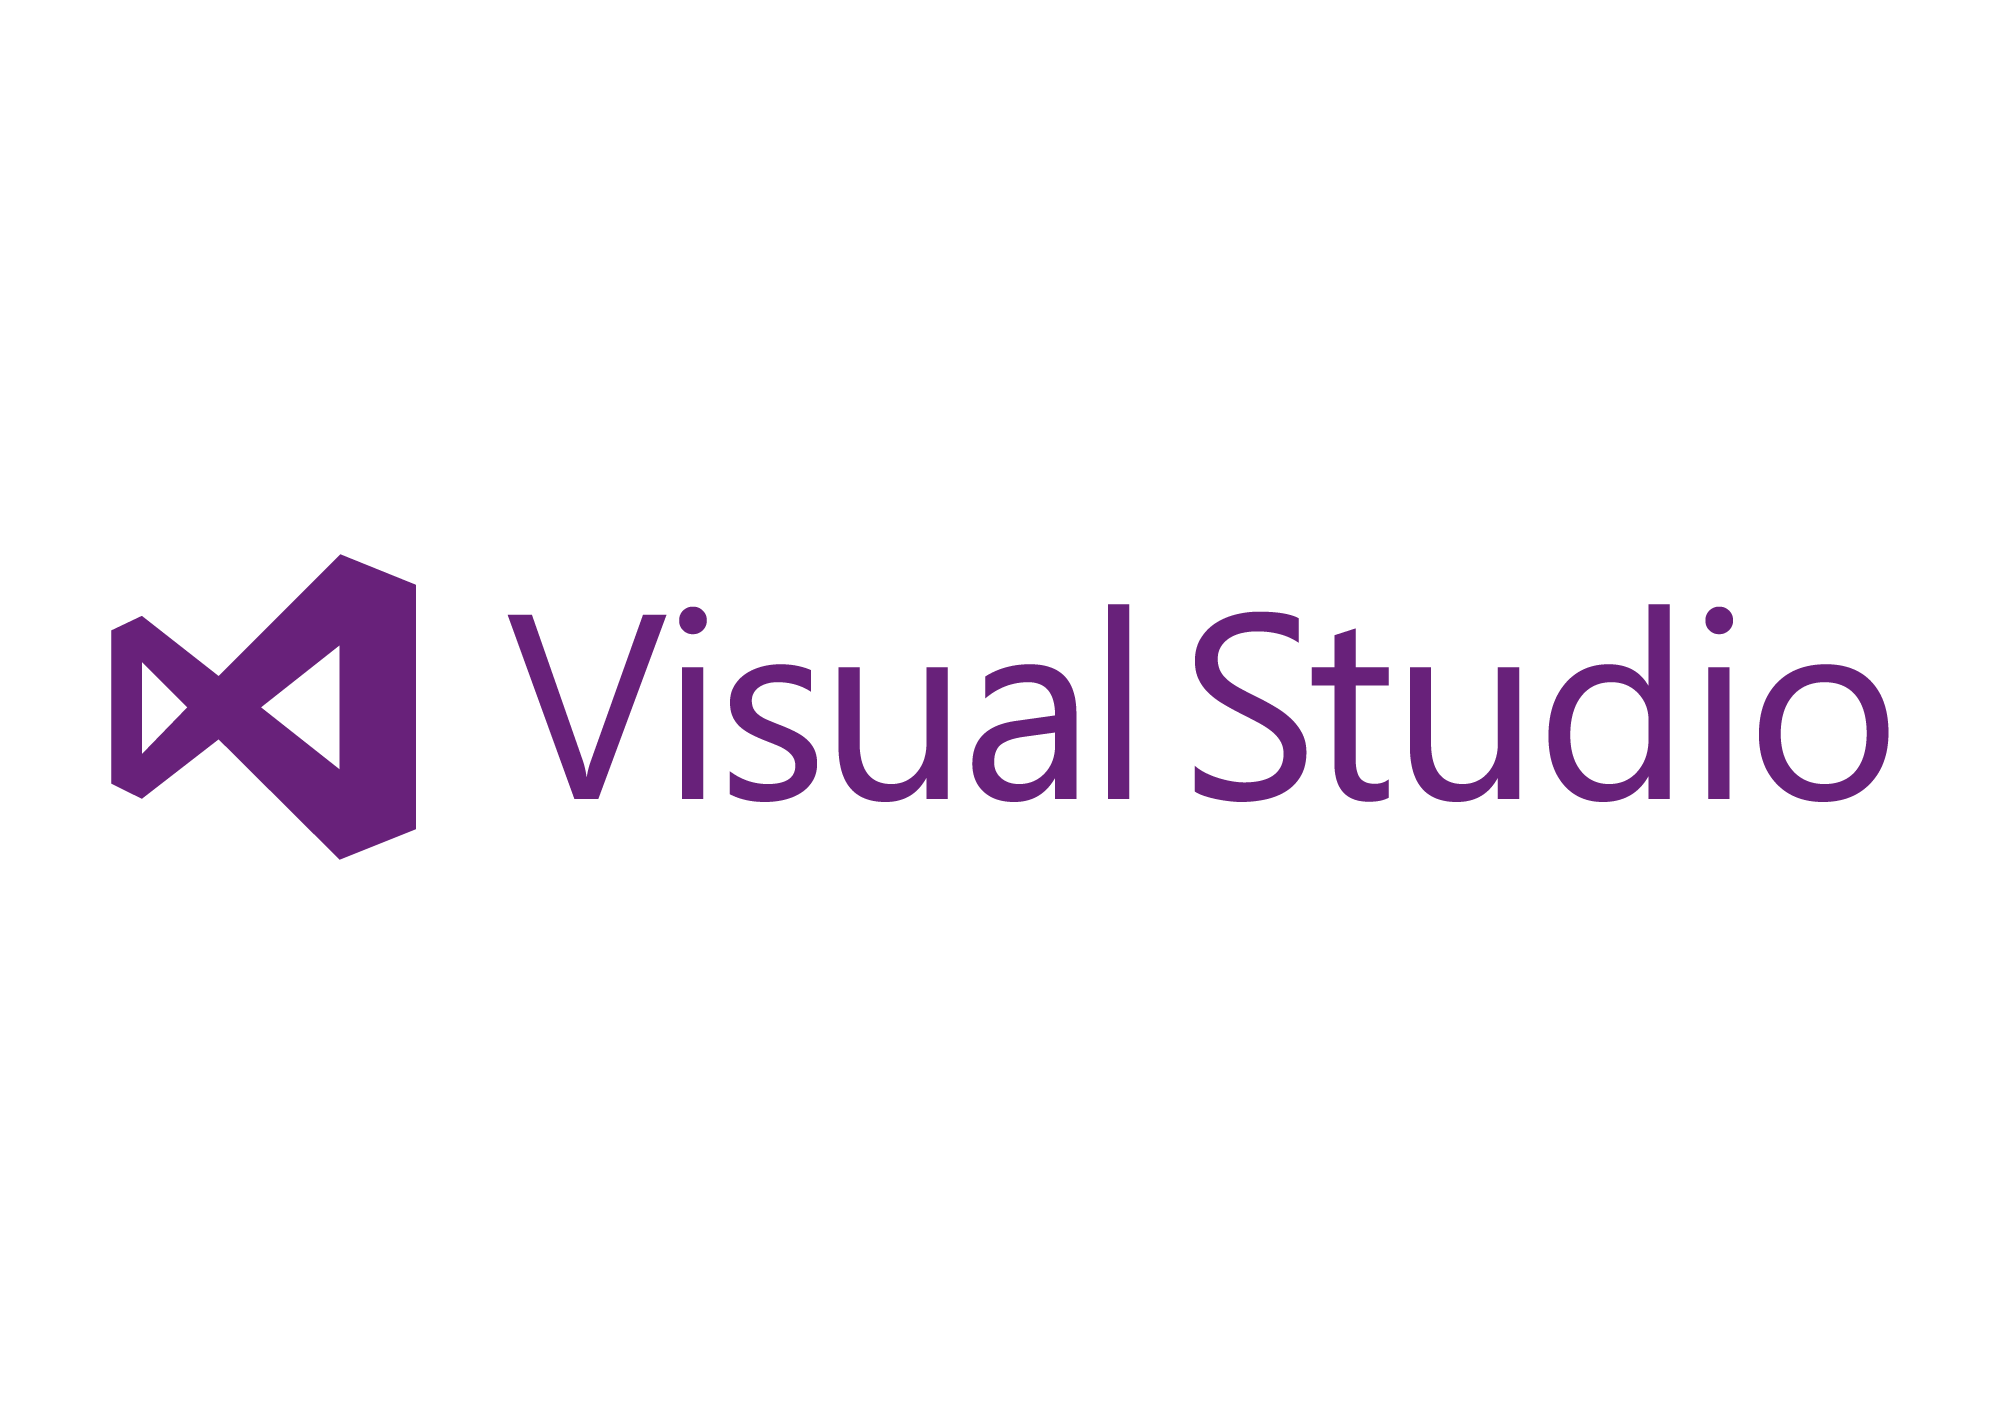 Download Microsoft Visual Studio Logo PNG and Vector (PDF, SVG, Ai, EPS